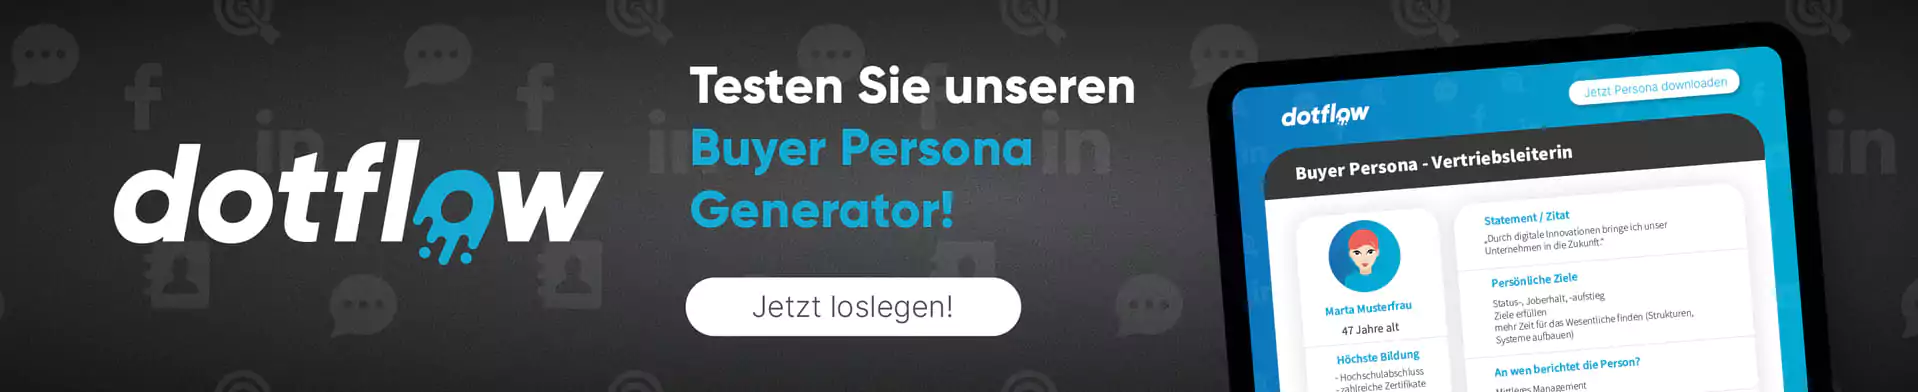 buyer persona generator